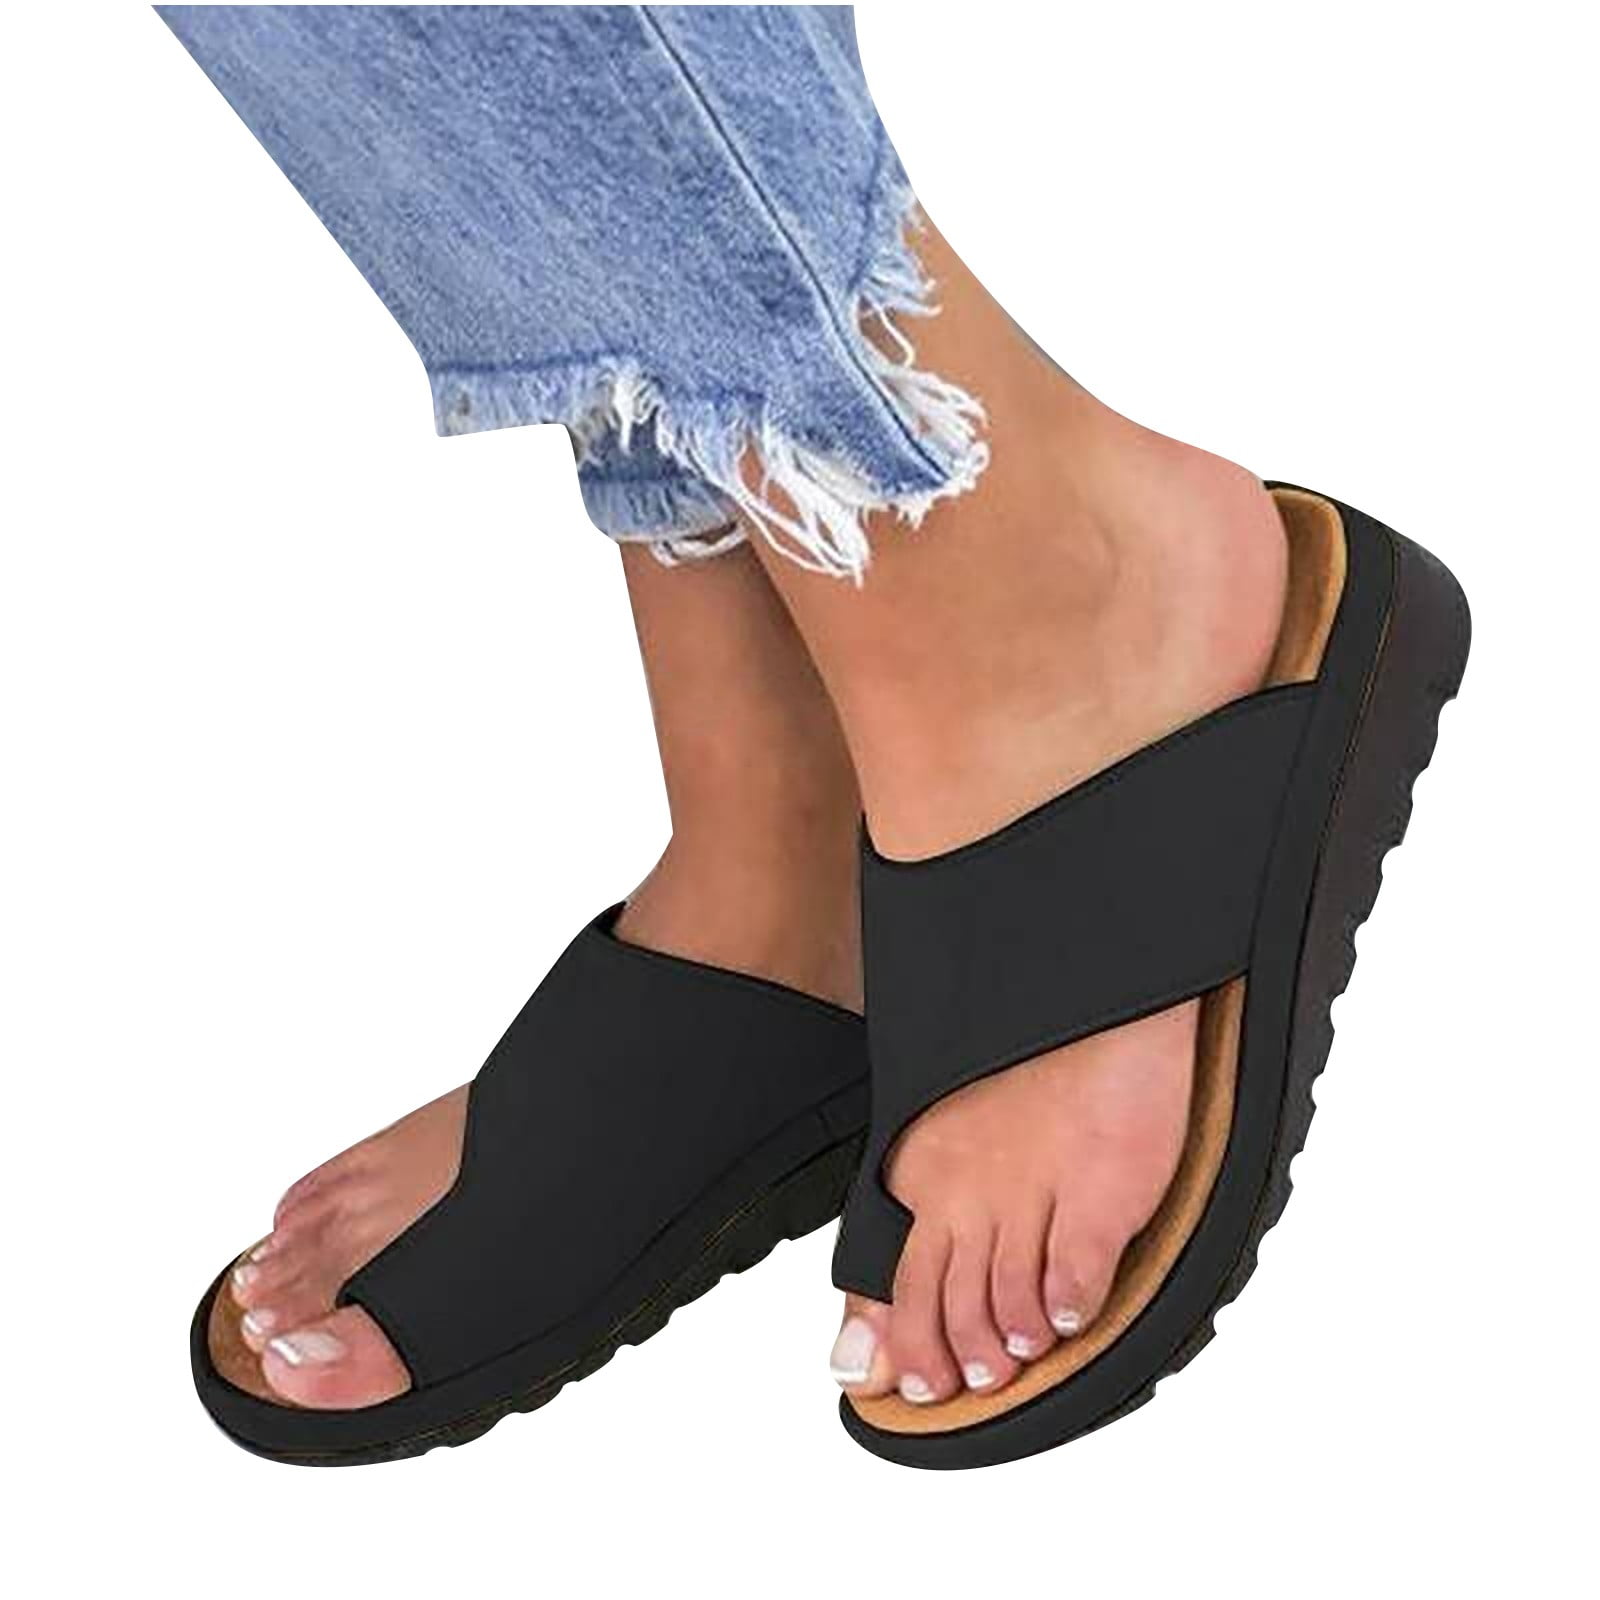 New Mens Sandals Summer Beach Walking Comfort Flip Flop Mules Shoes Size UK 7-12 